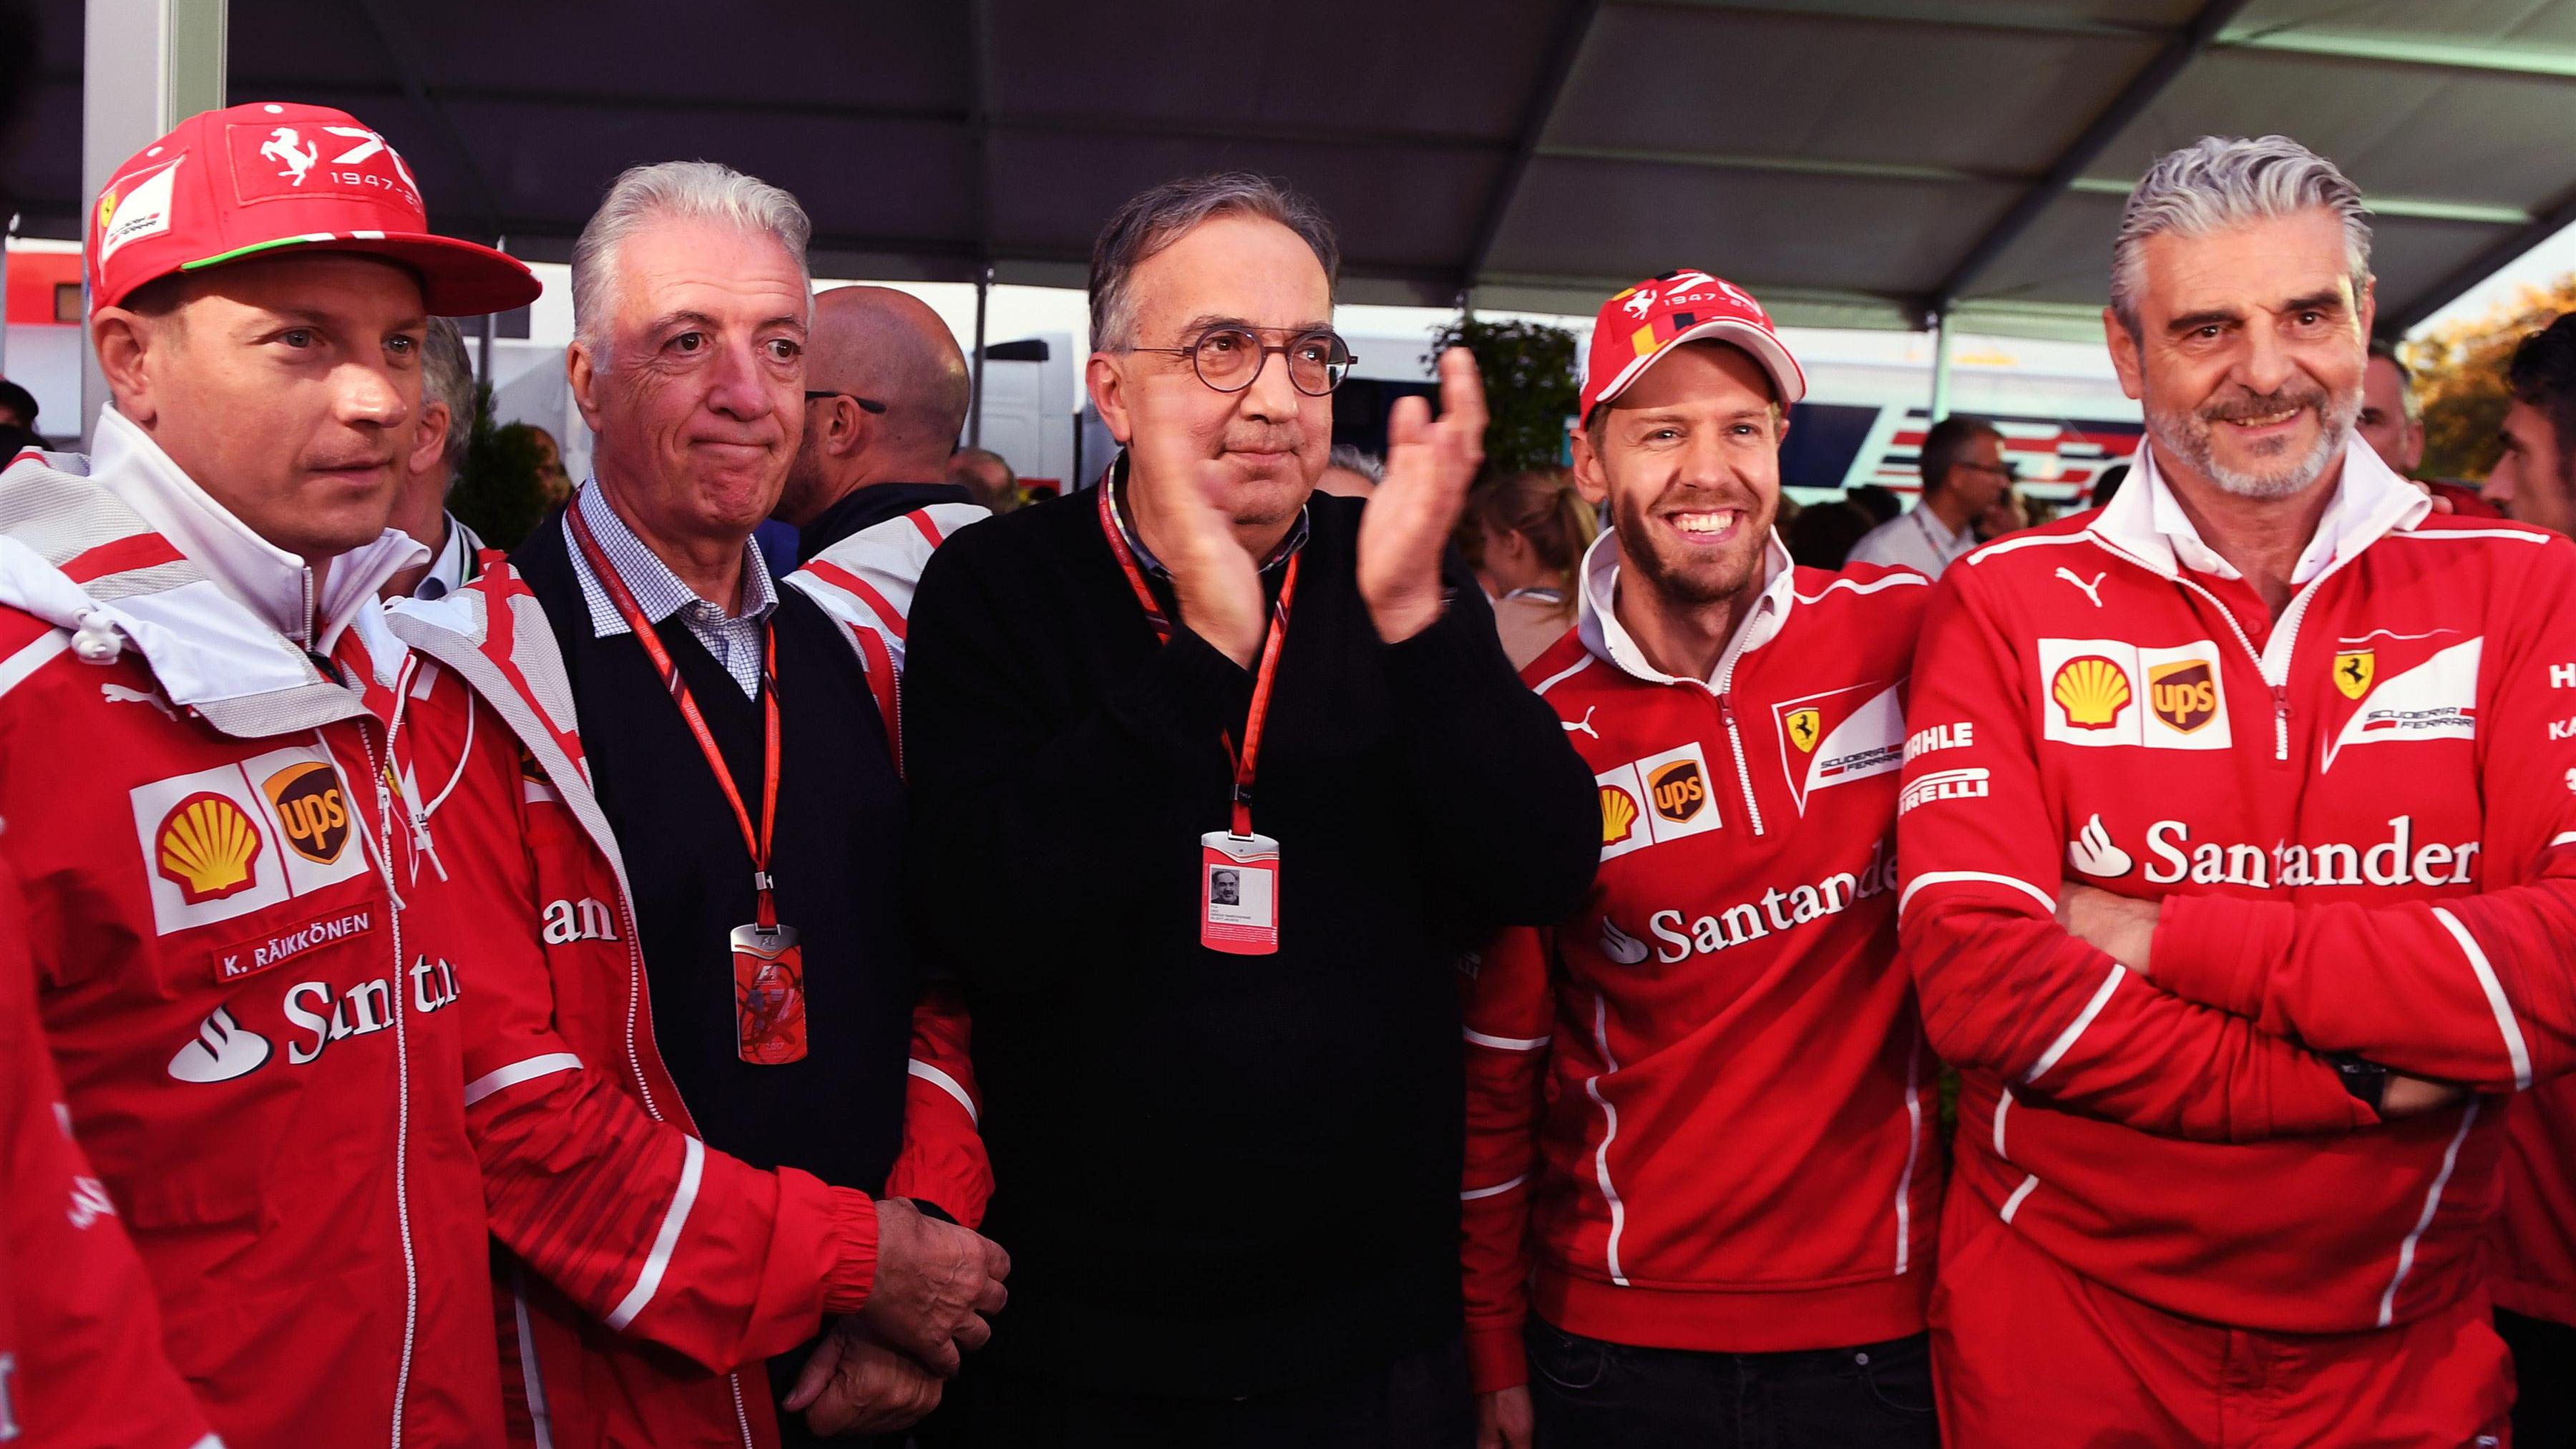 Singapore preview - Ferrari poised to strike back